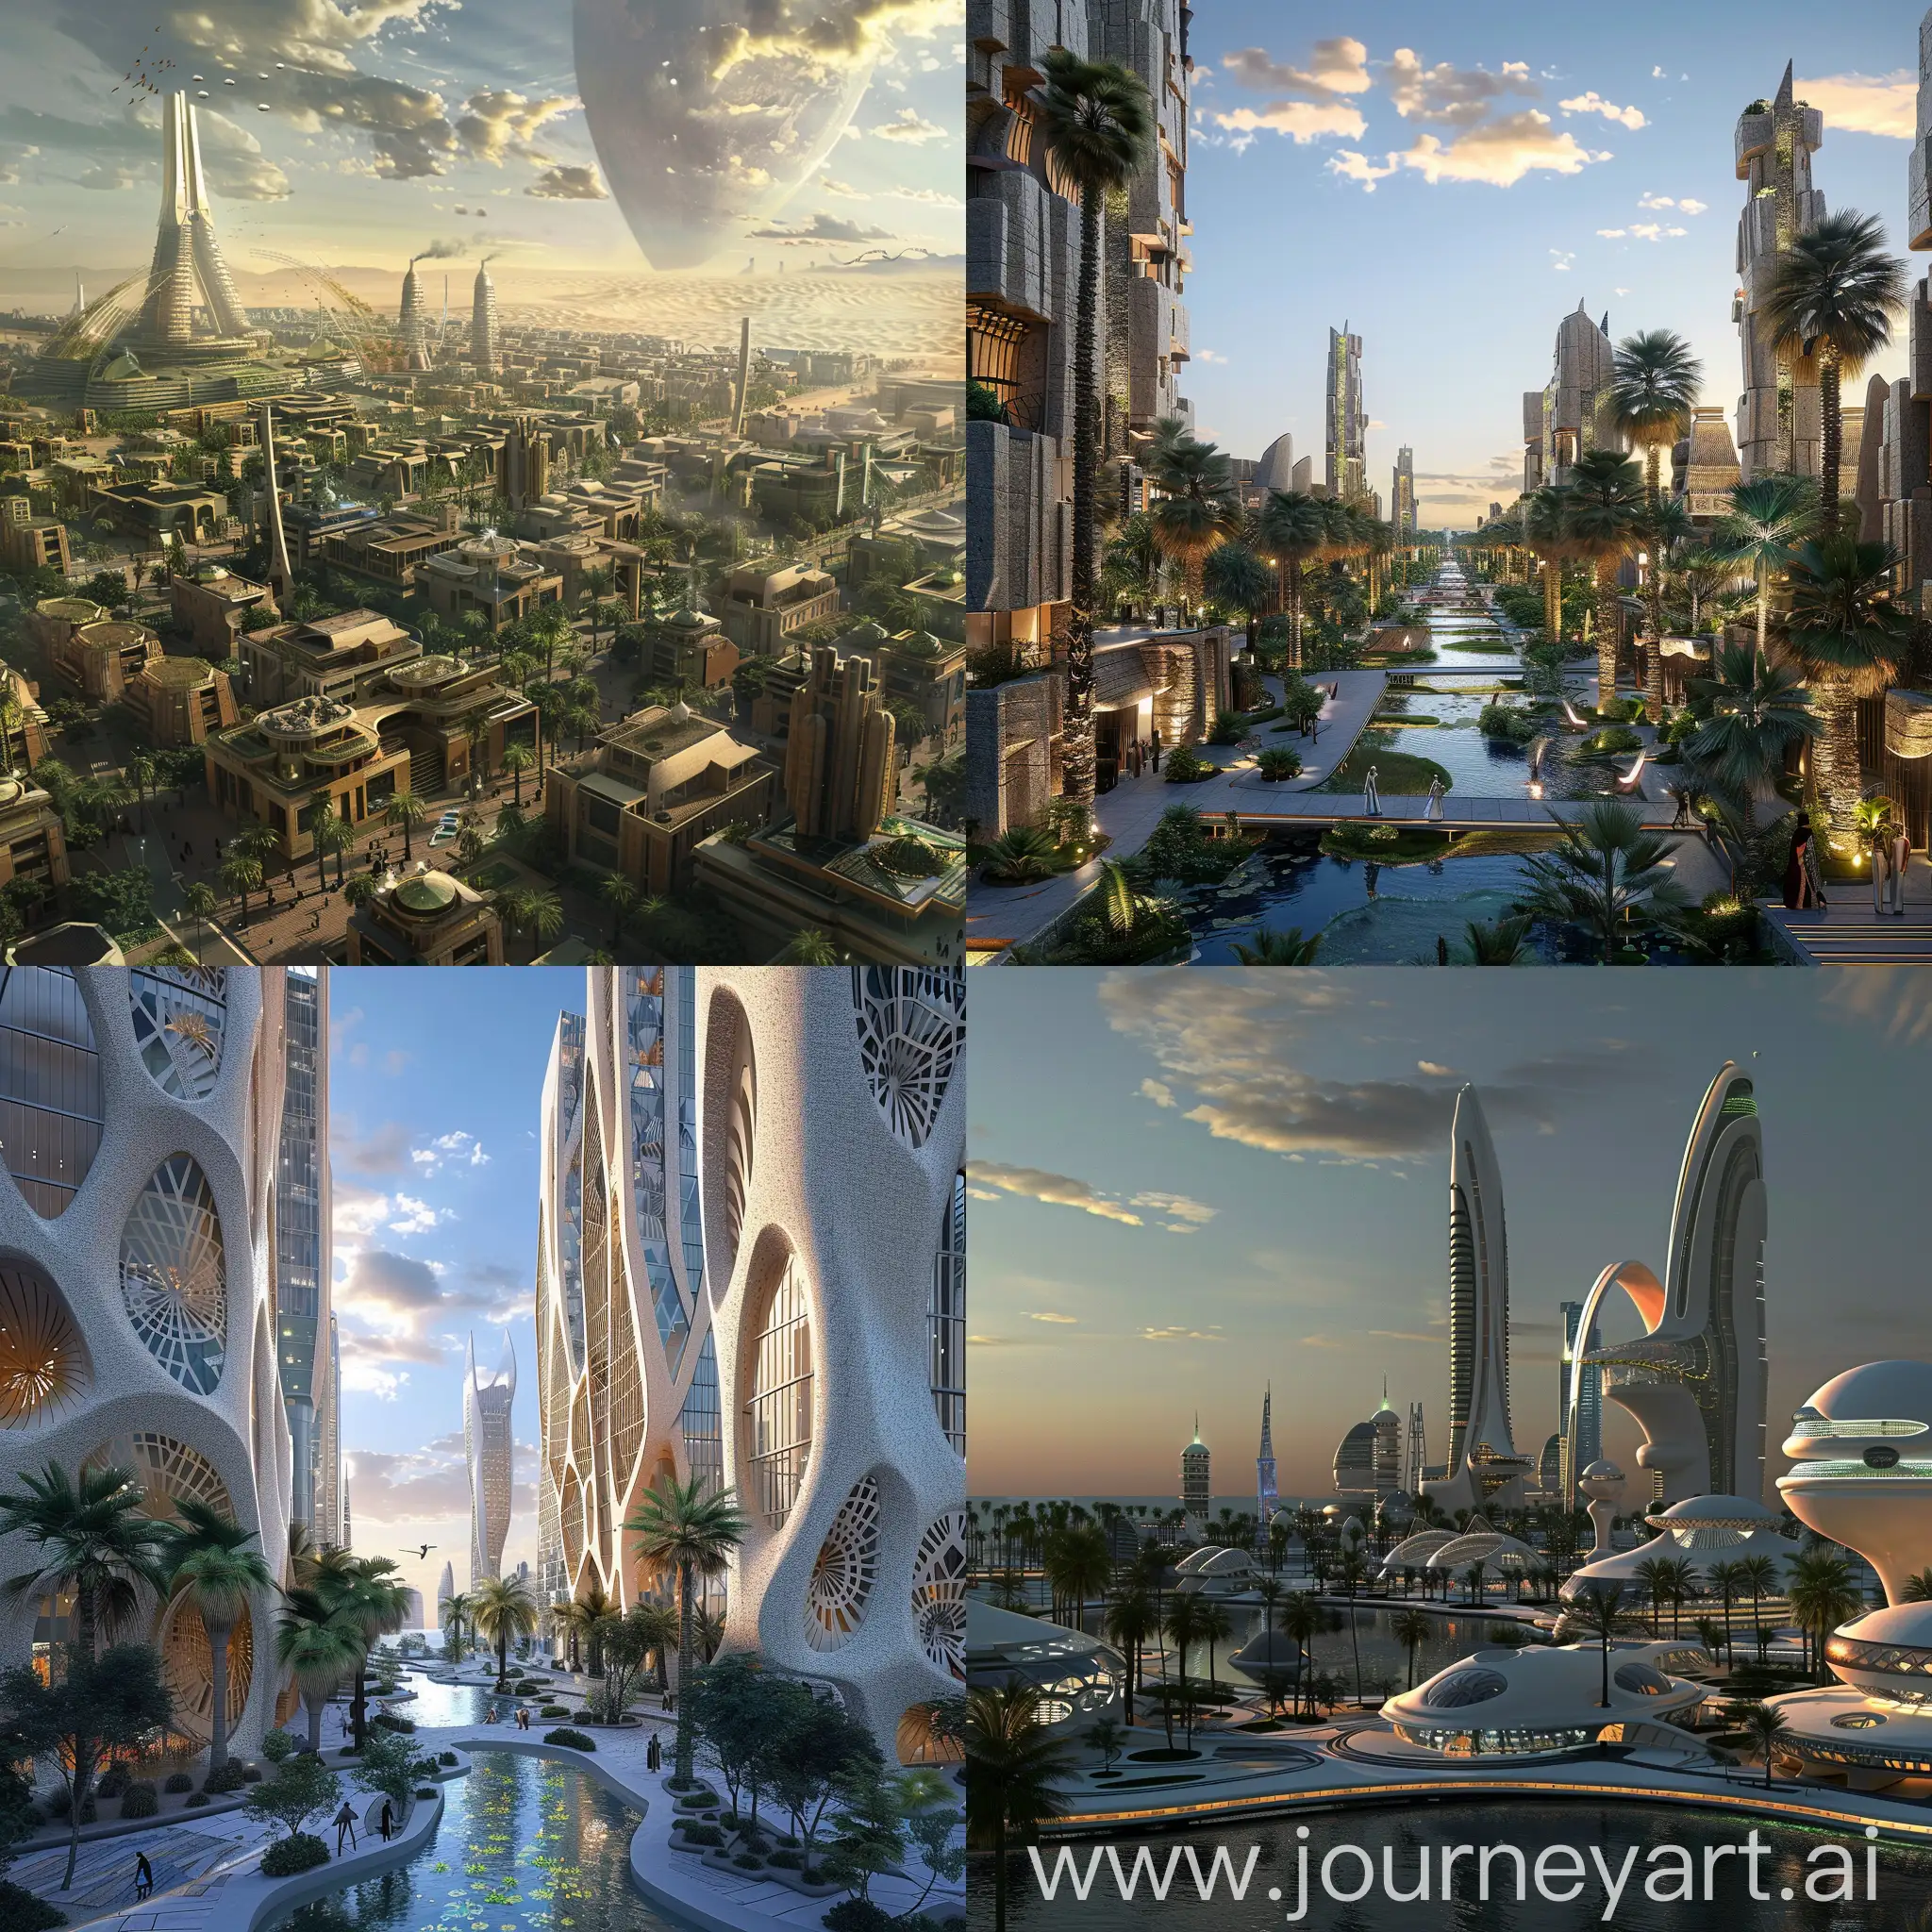 Futuristic-City-of-Damietta-Imagination-and-Innovation